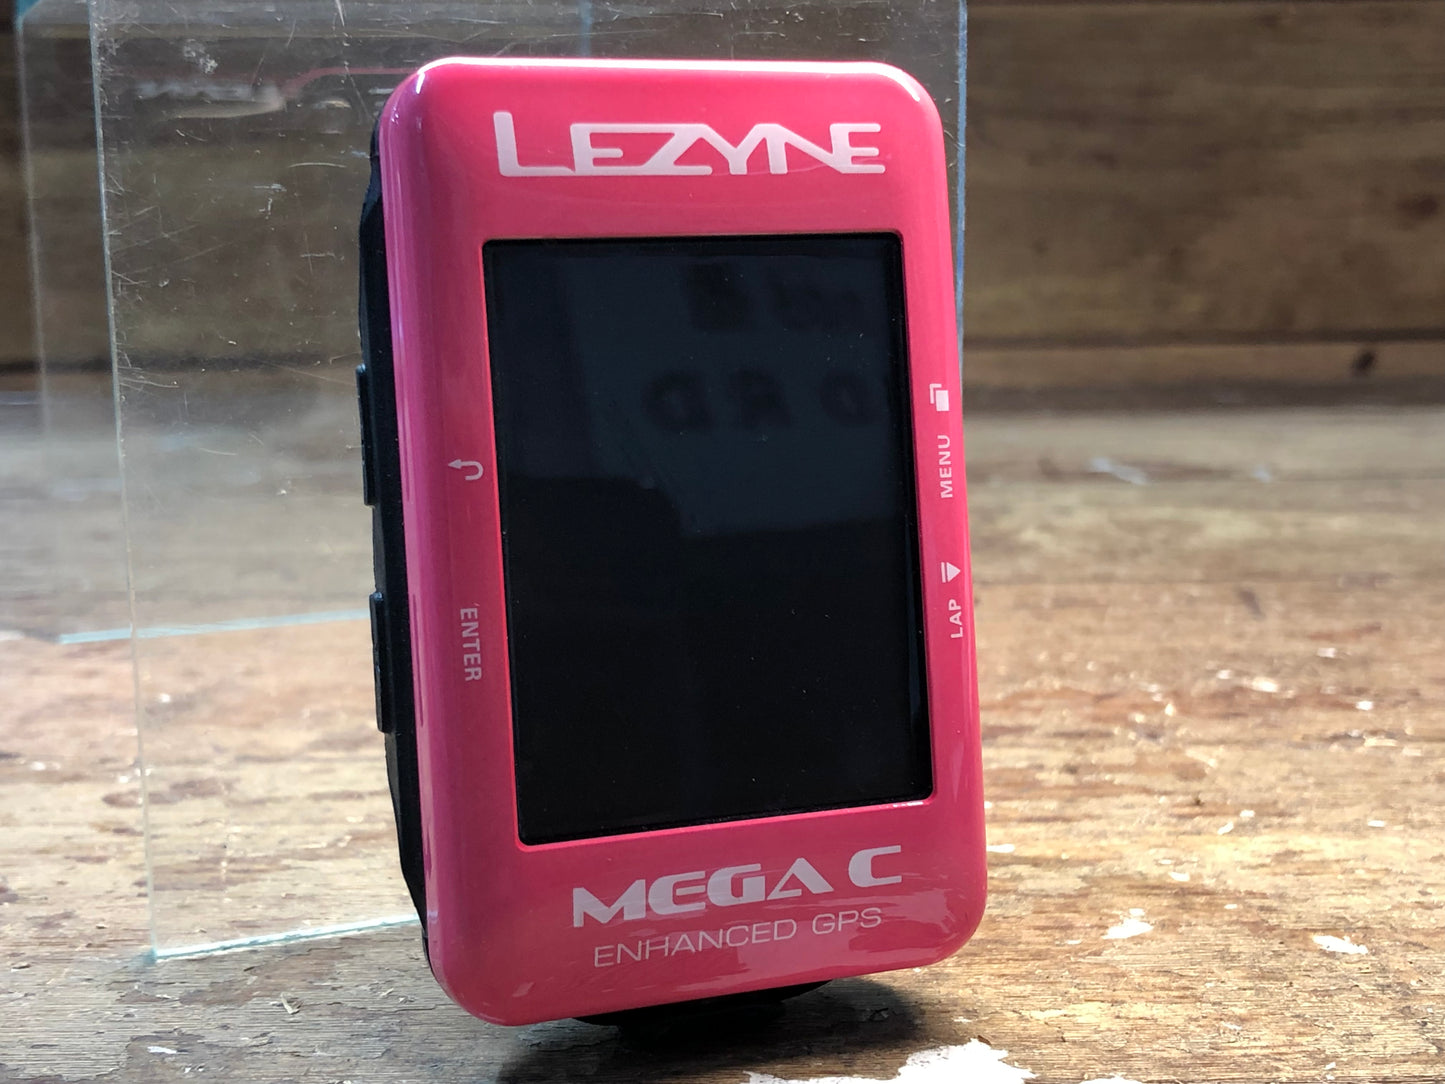 GW974 レザイン LEZYNE MEGA C GPS サイクルコンピューター 動作確認済み ※本体のみ、マウント付属